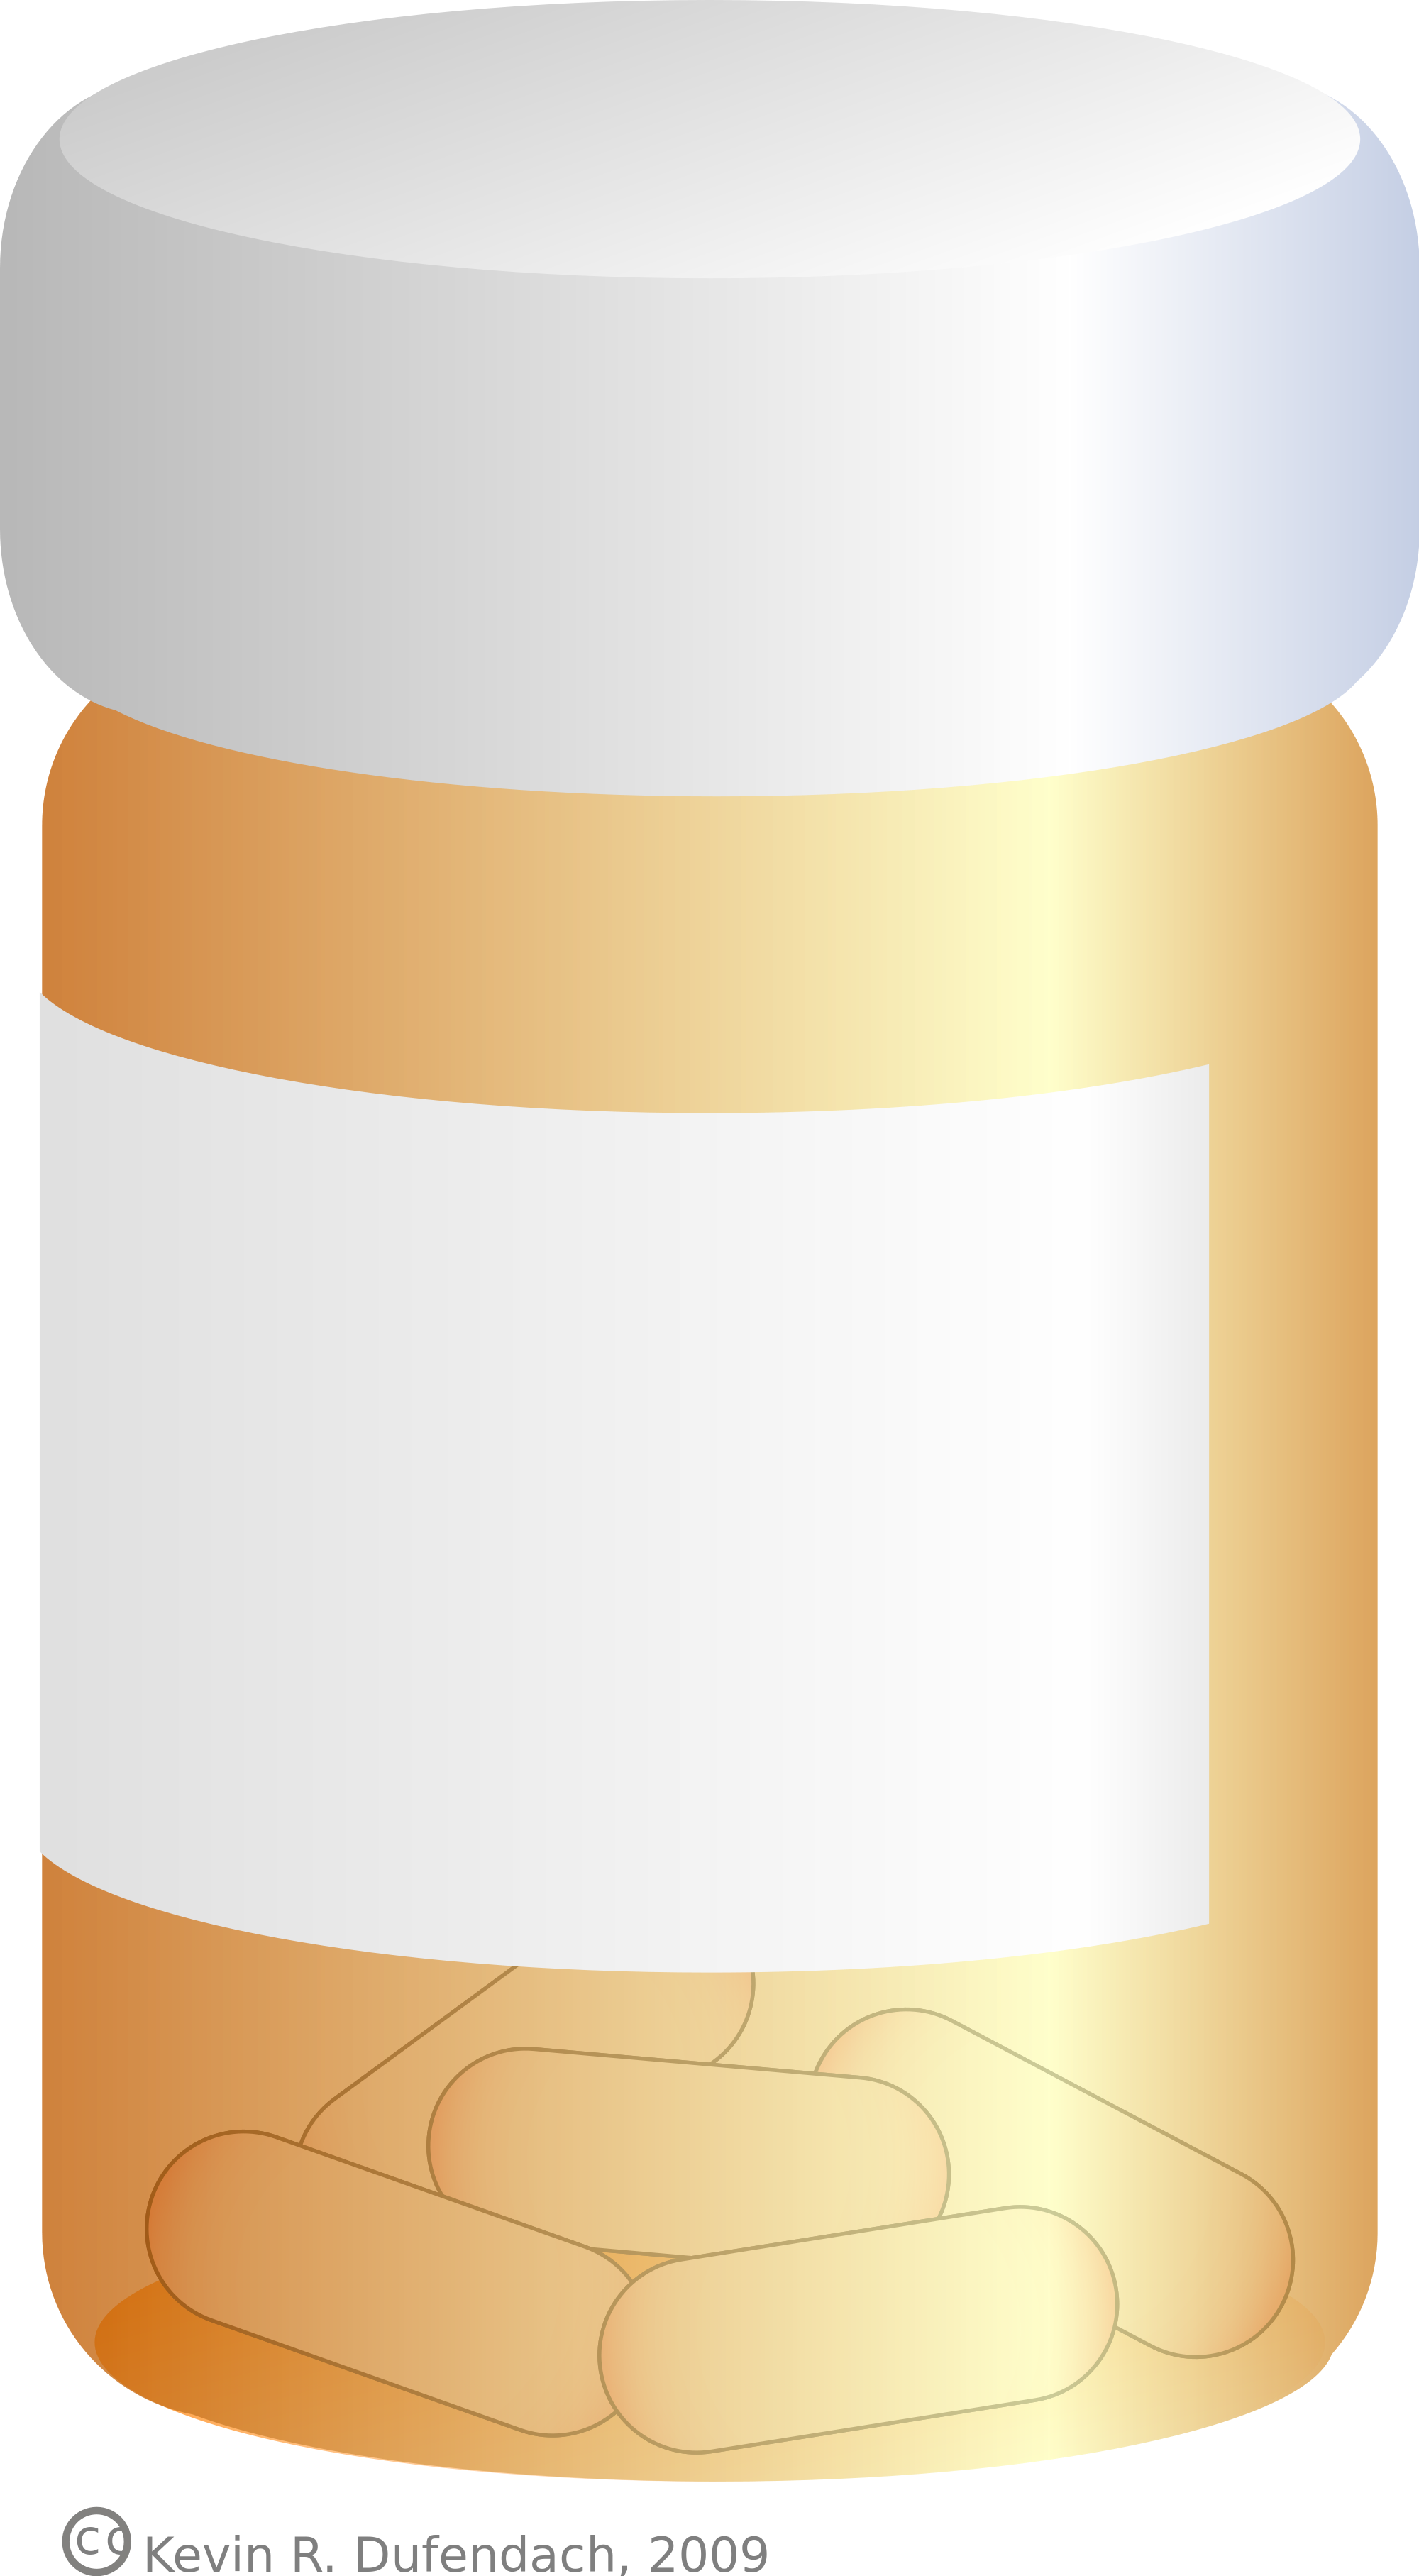 Vitamin Bottle